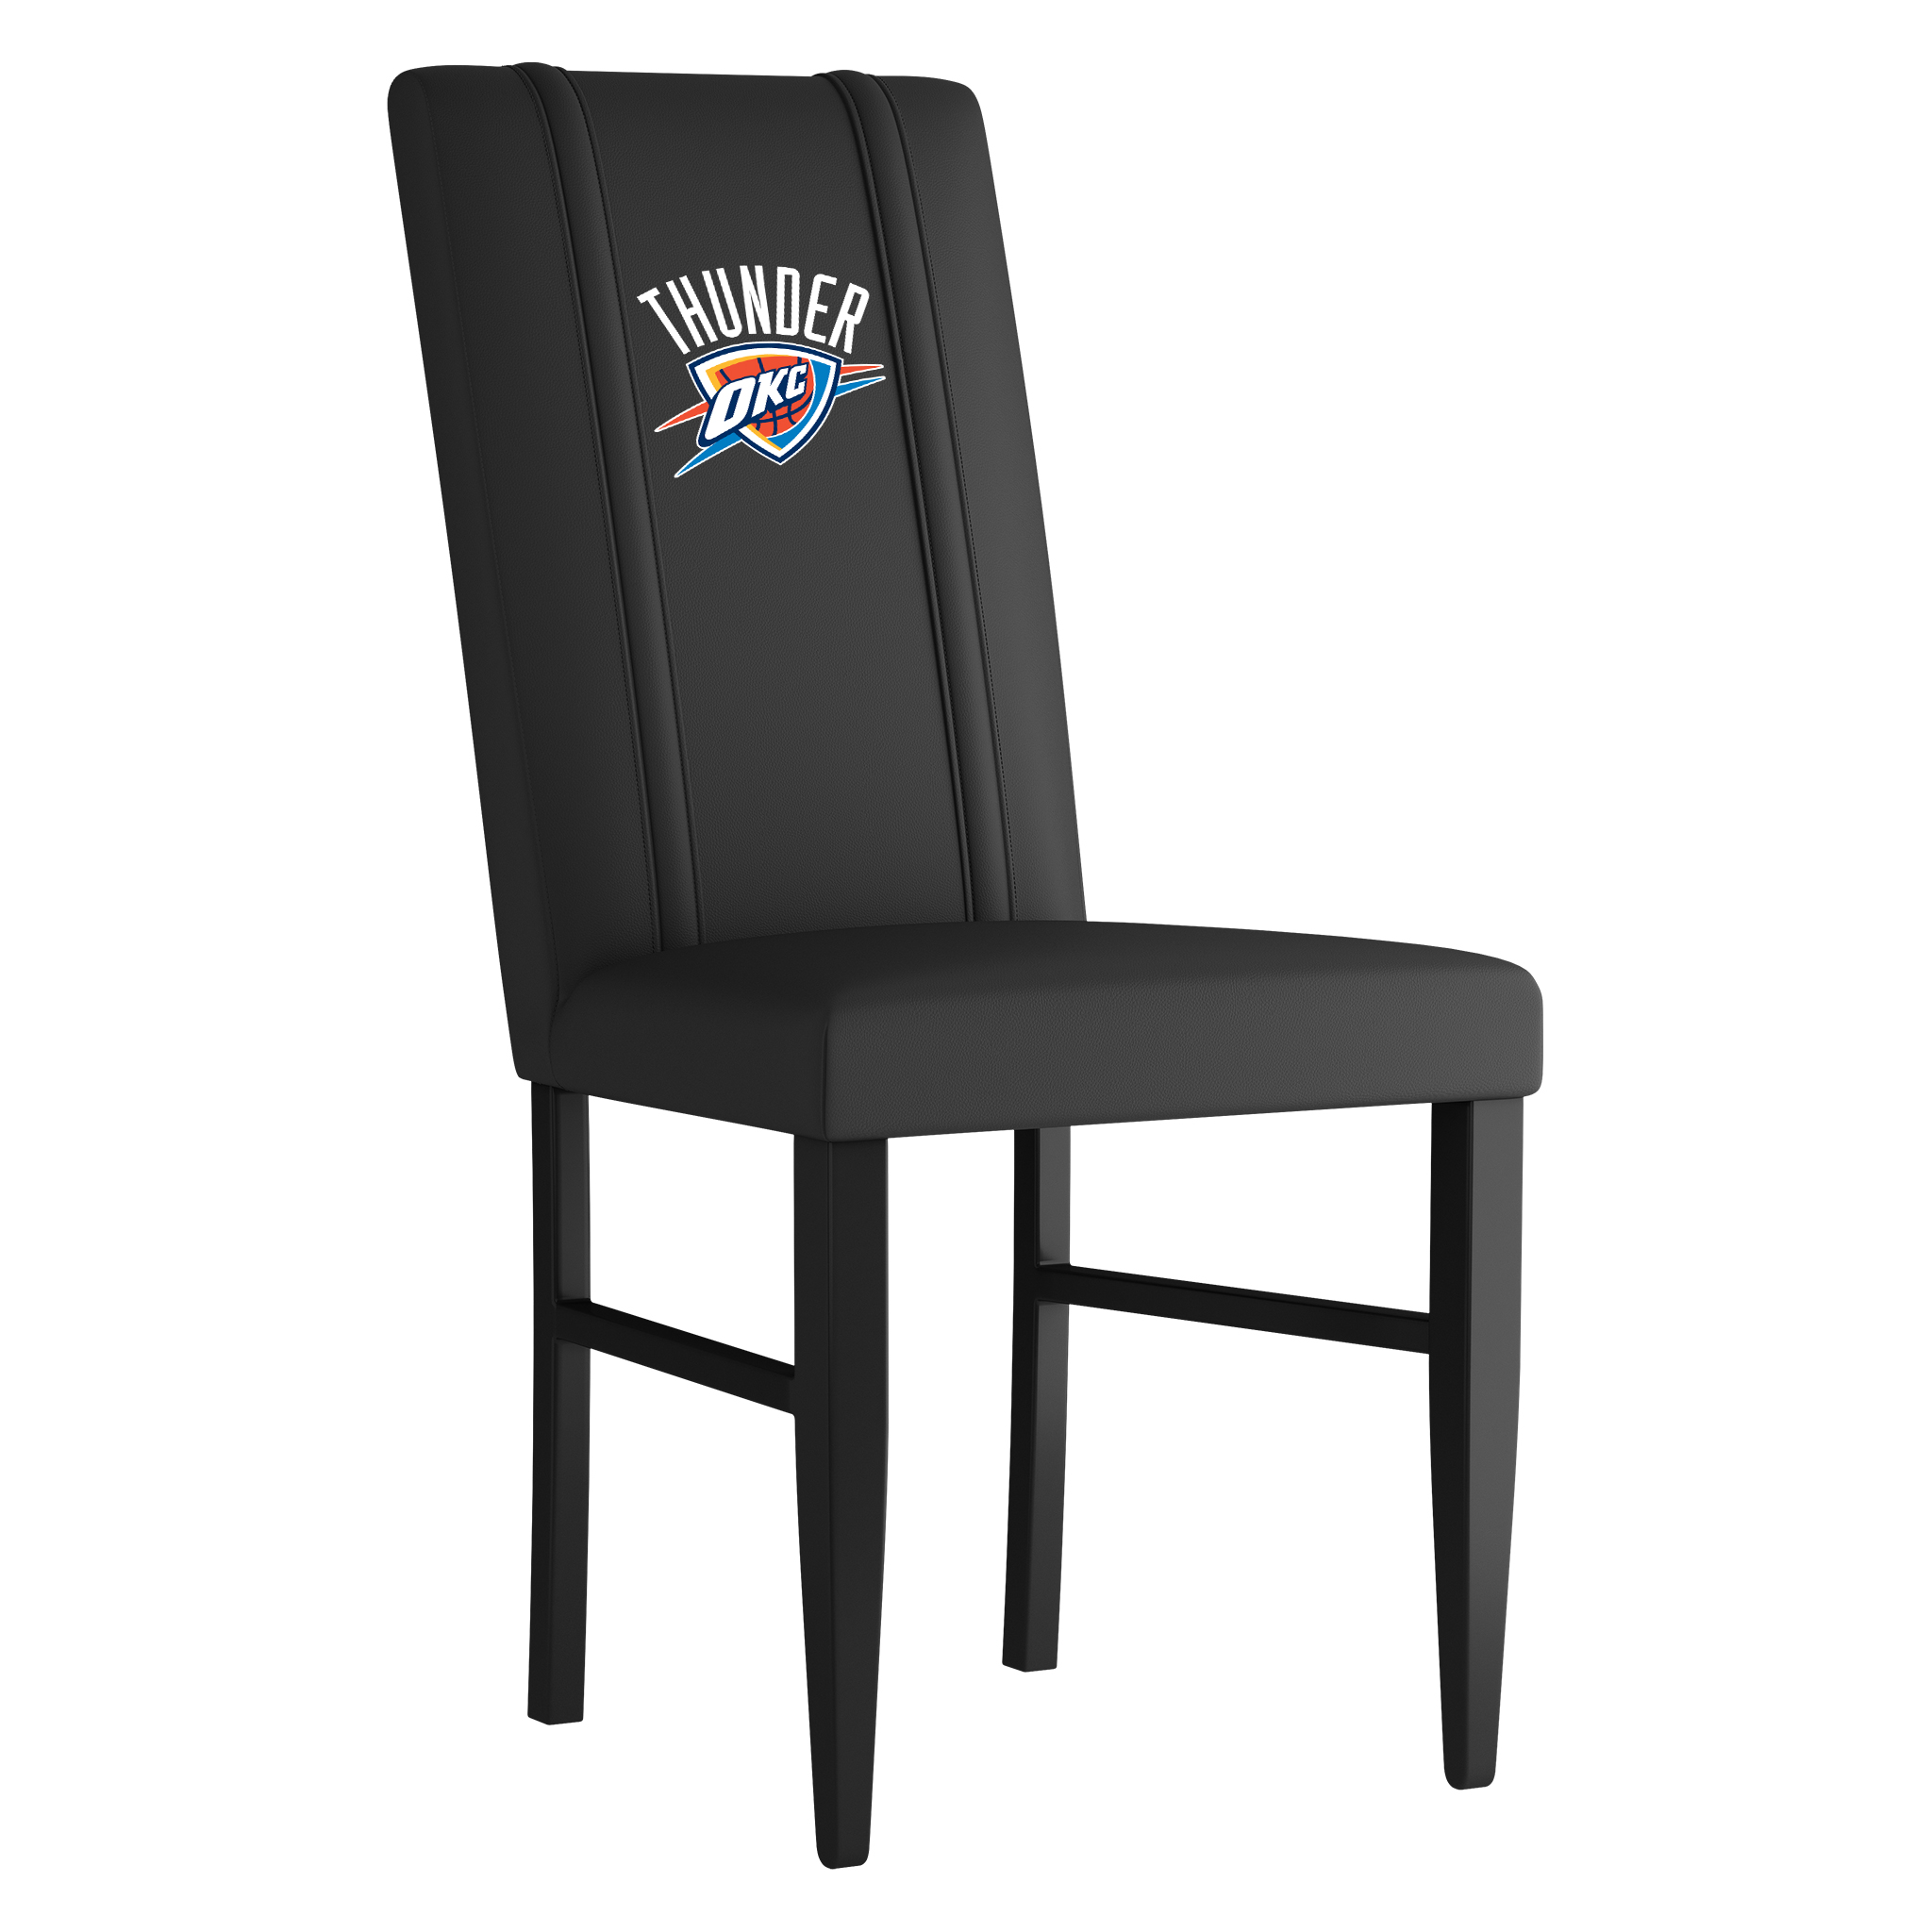 Oklahoma City Thunder Side Chair 2000 With Oklahoma City Thunder Logo